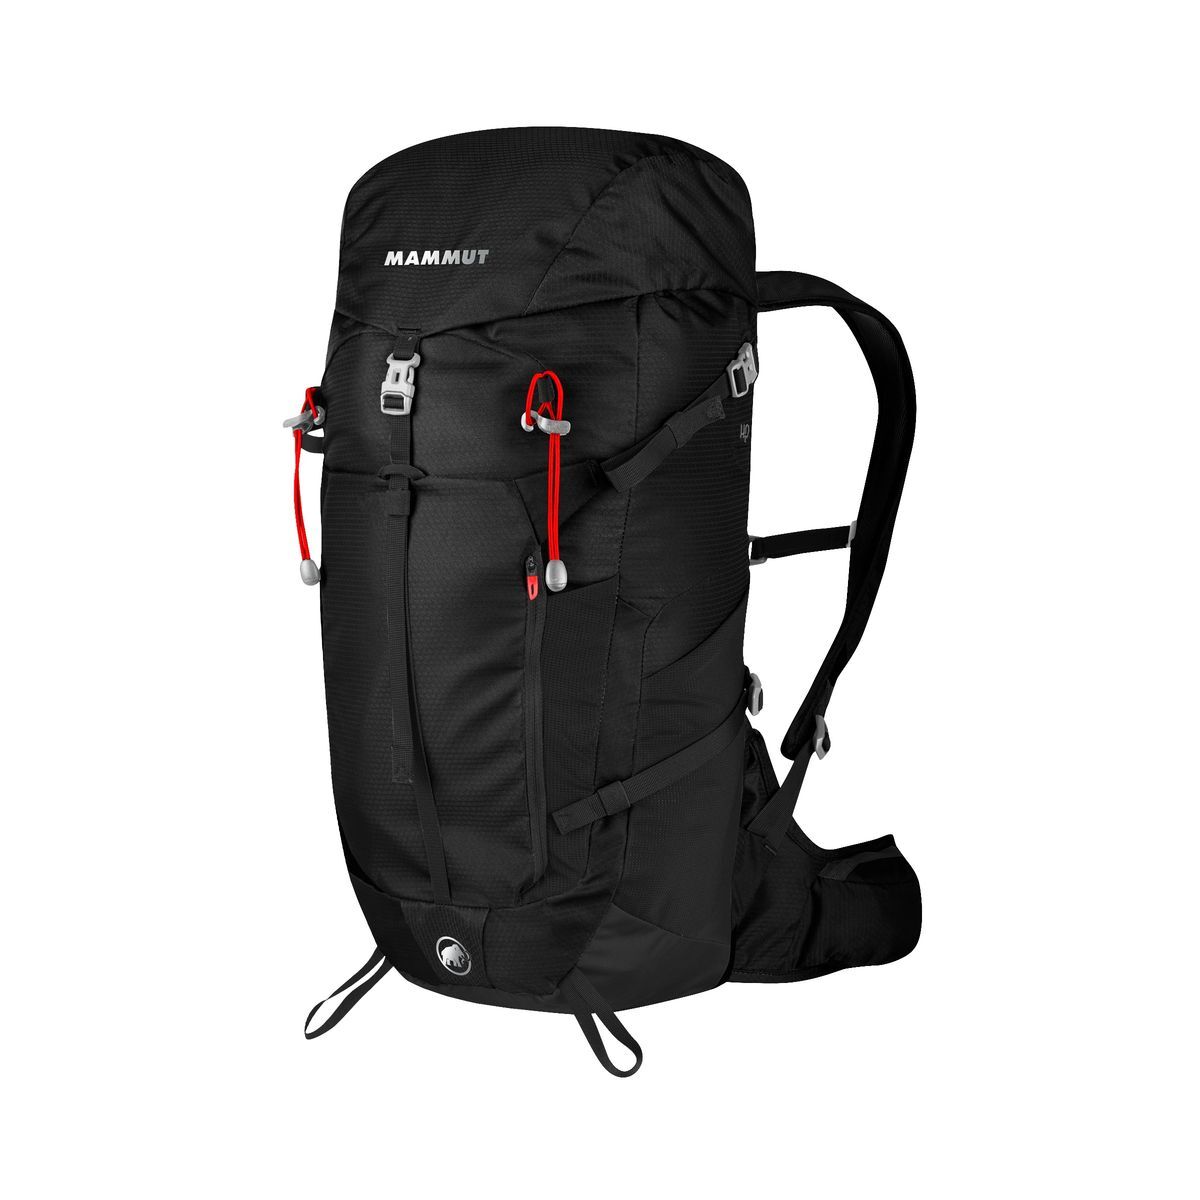 Mammut Lithium Pro - Hiking backpack - Men's